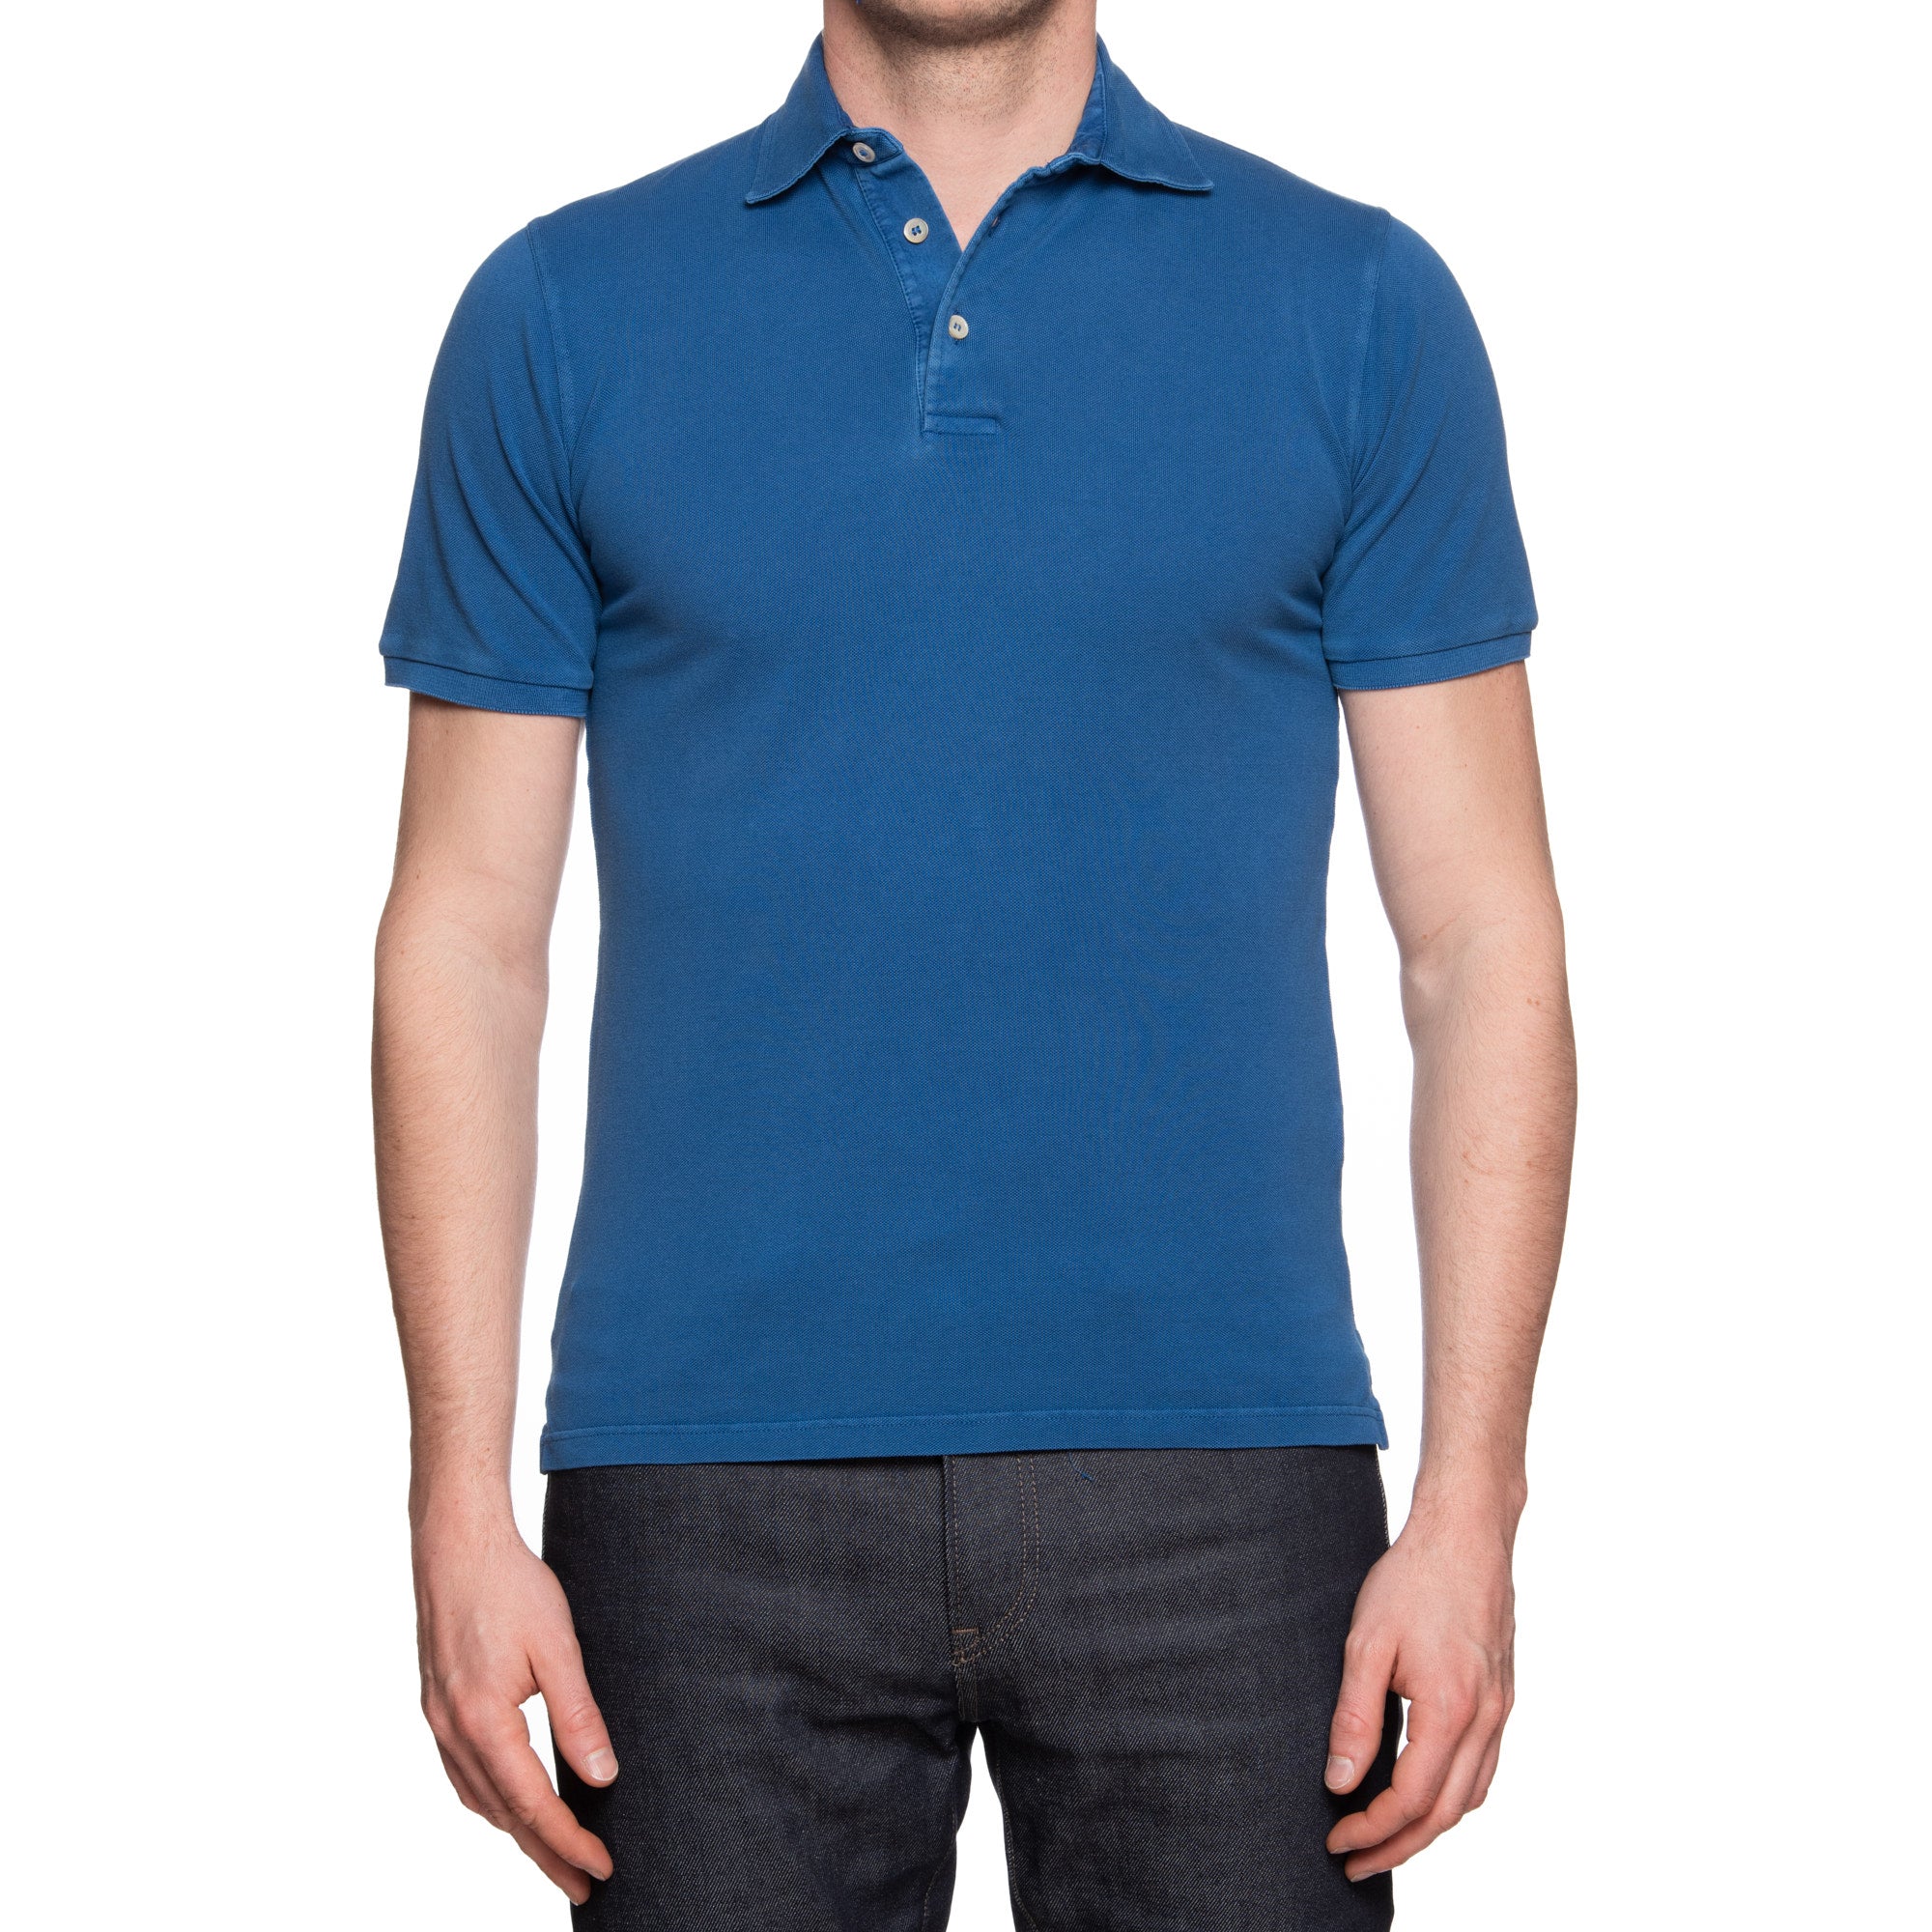 FEDELI "North" Blue Cotton Pique Short Sleeve Polo Shirt EU 46 NEW US XS FEDELI